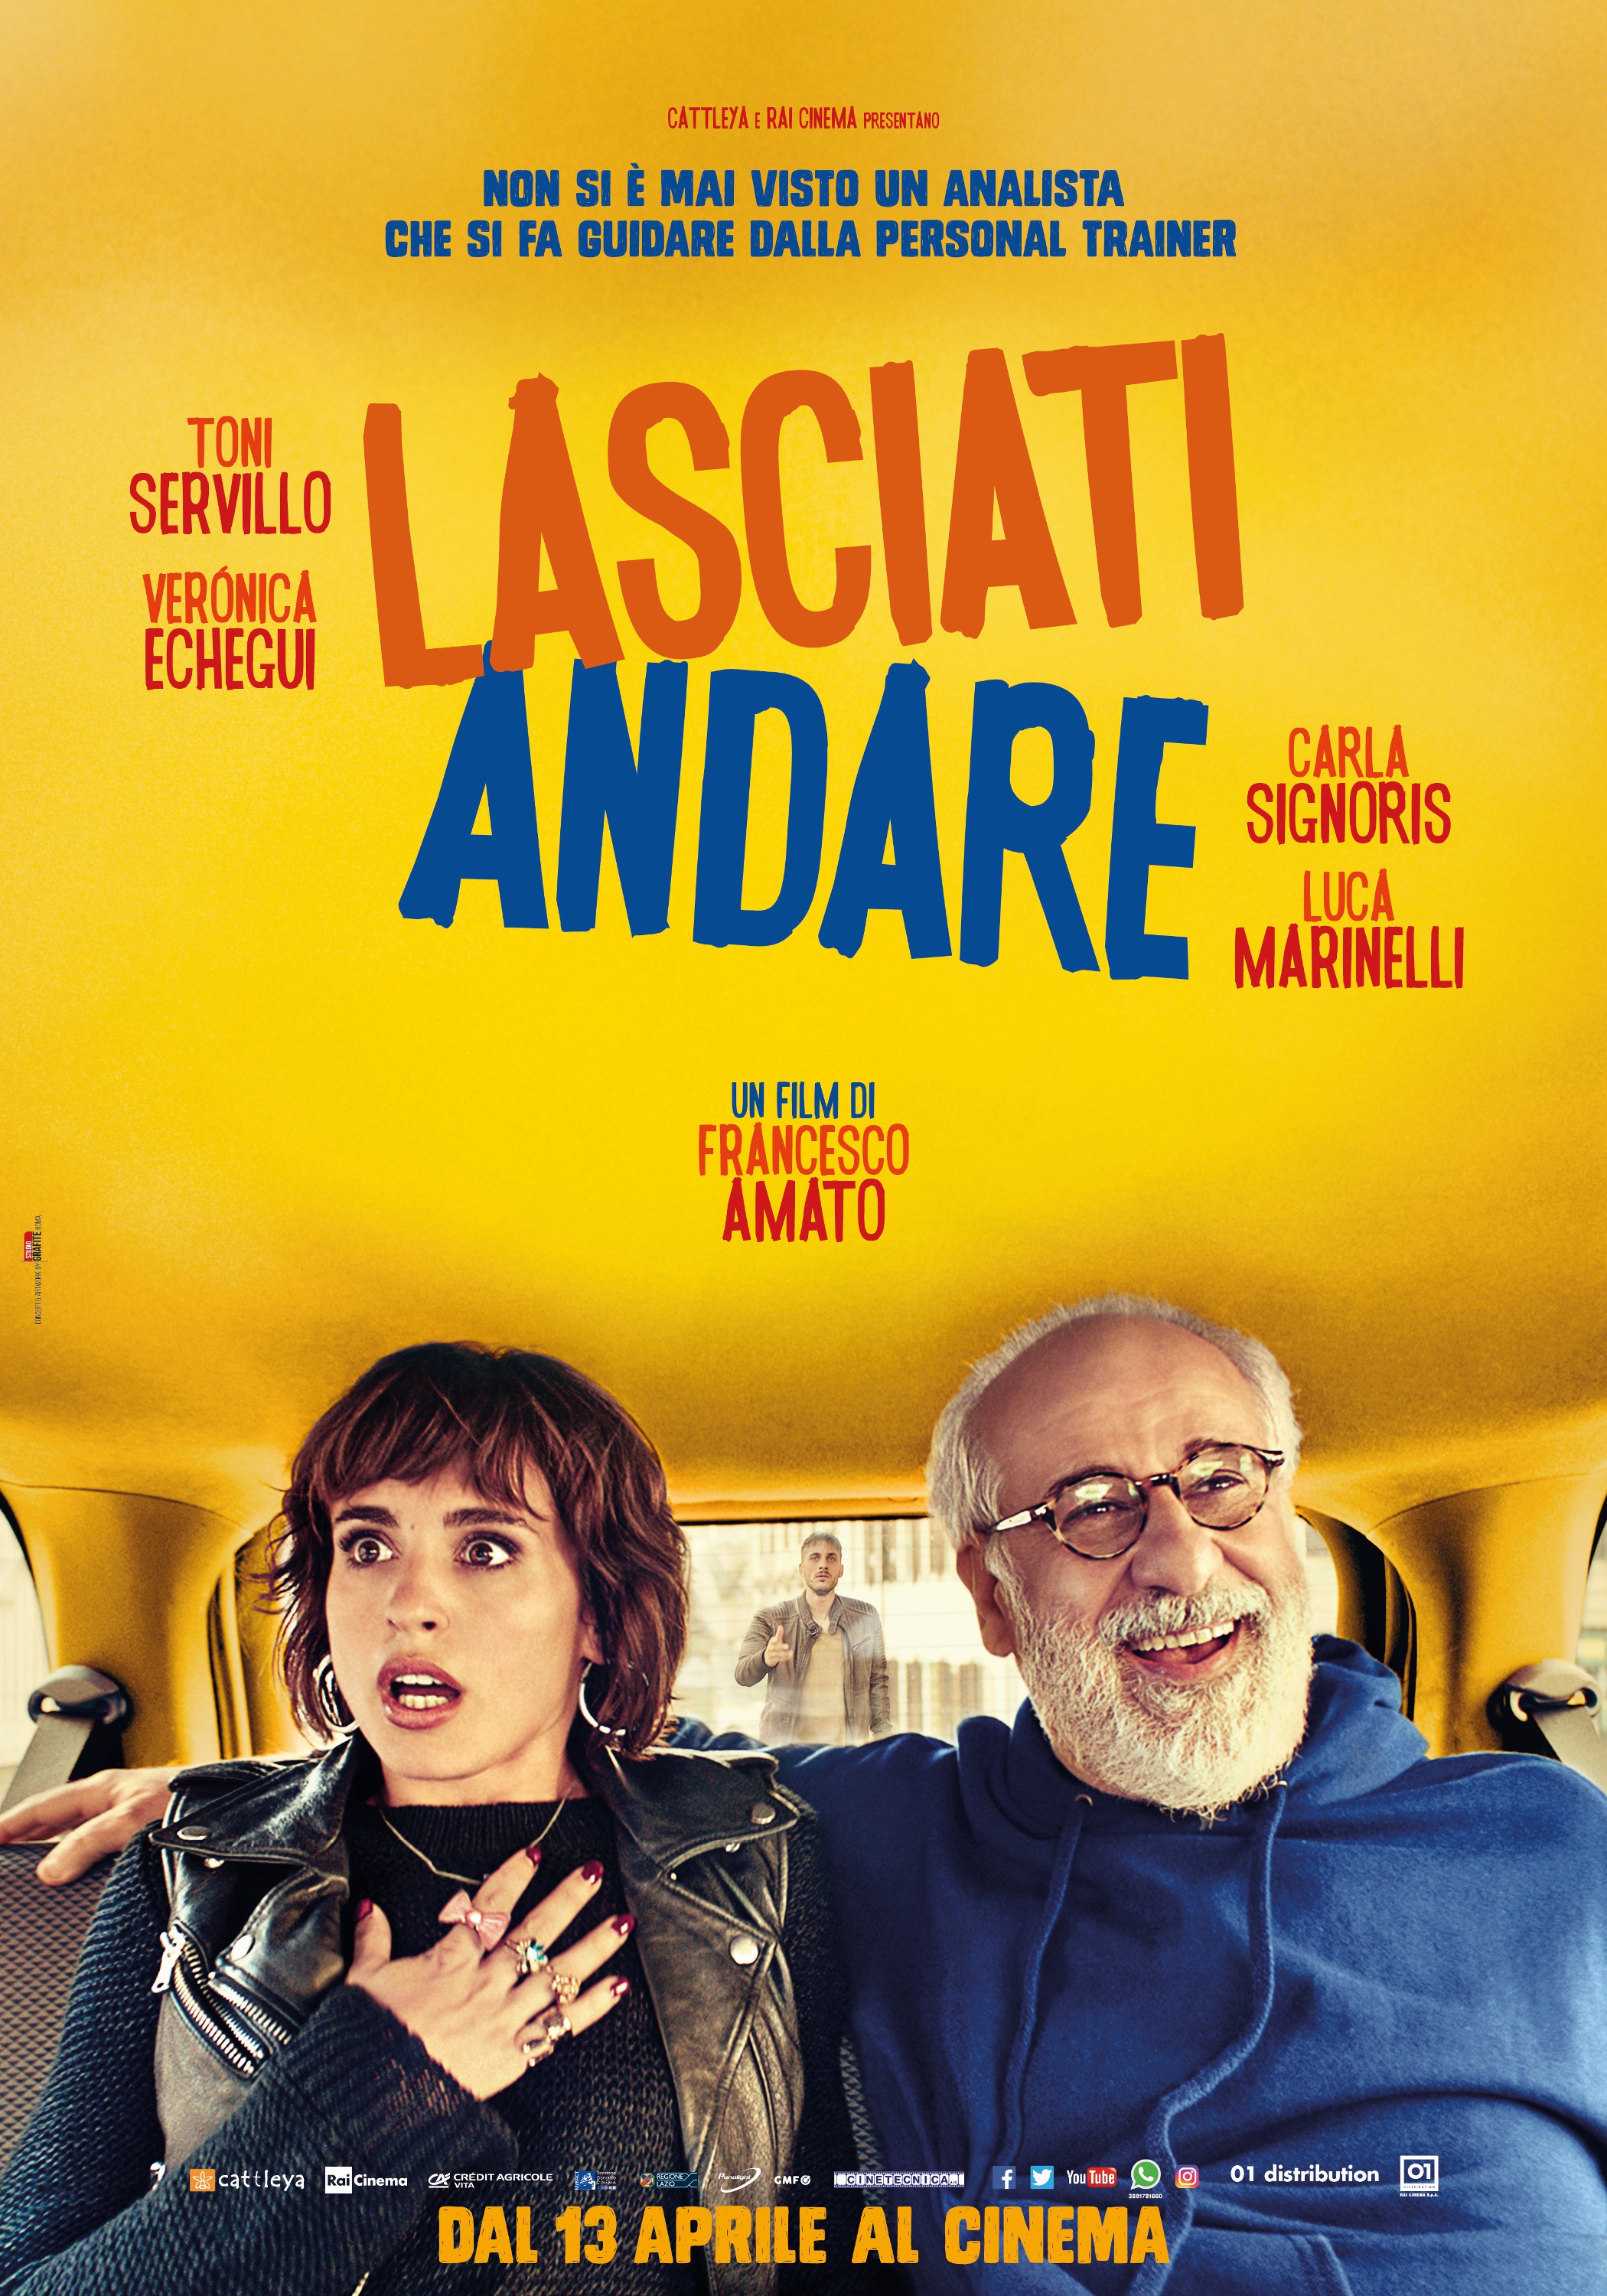 Mega Sized Movie Poster Image for Lasciati andare 